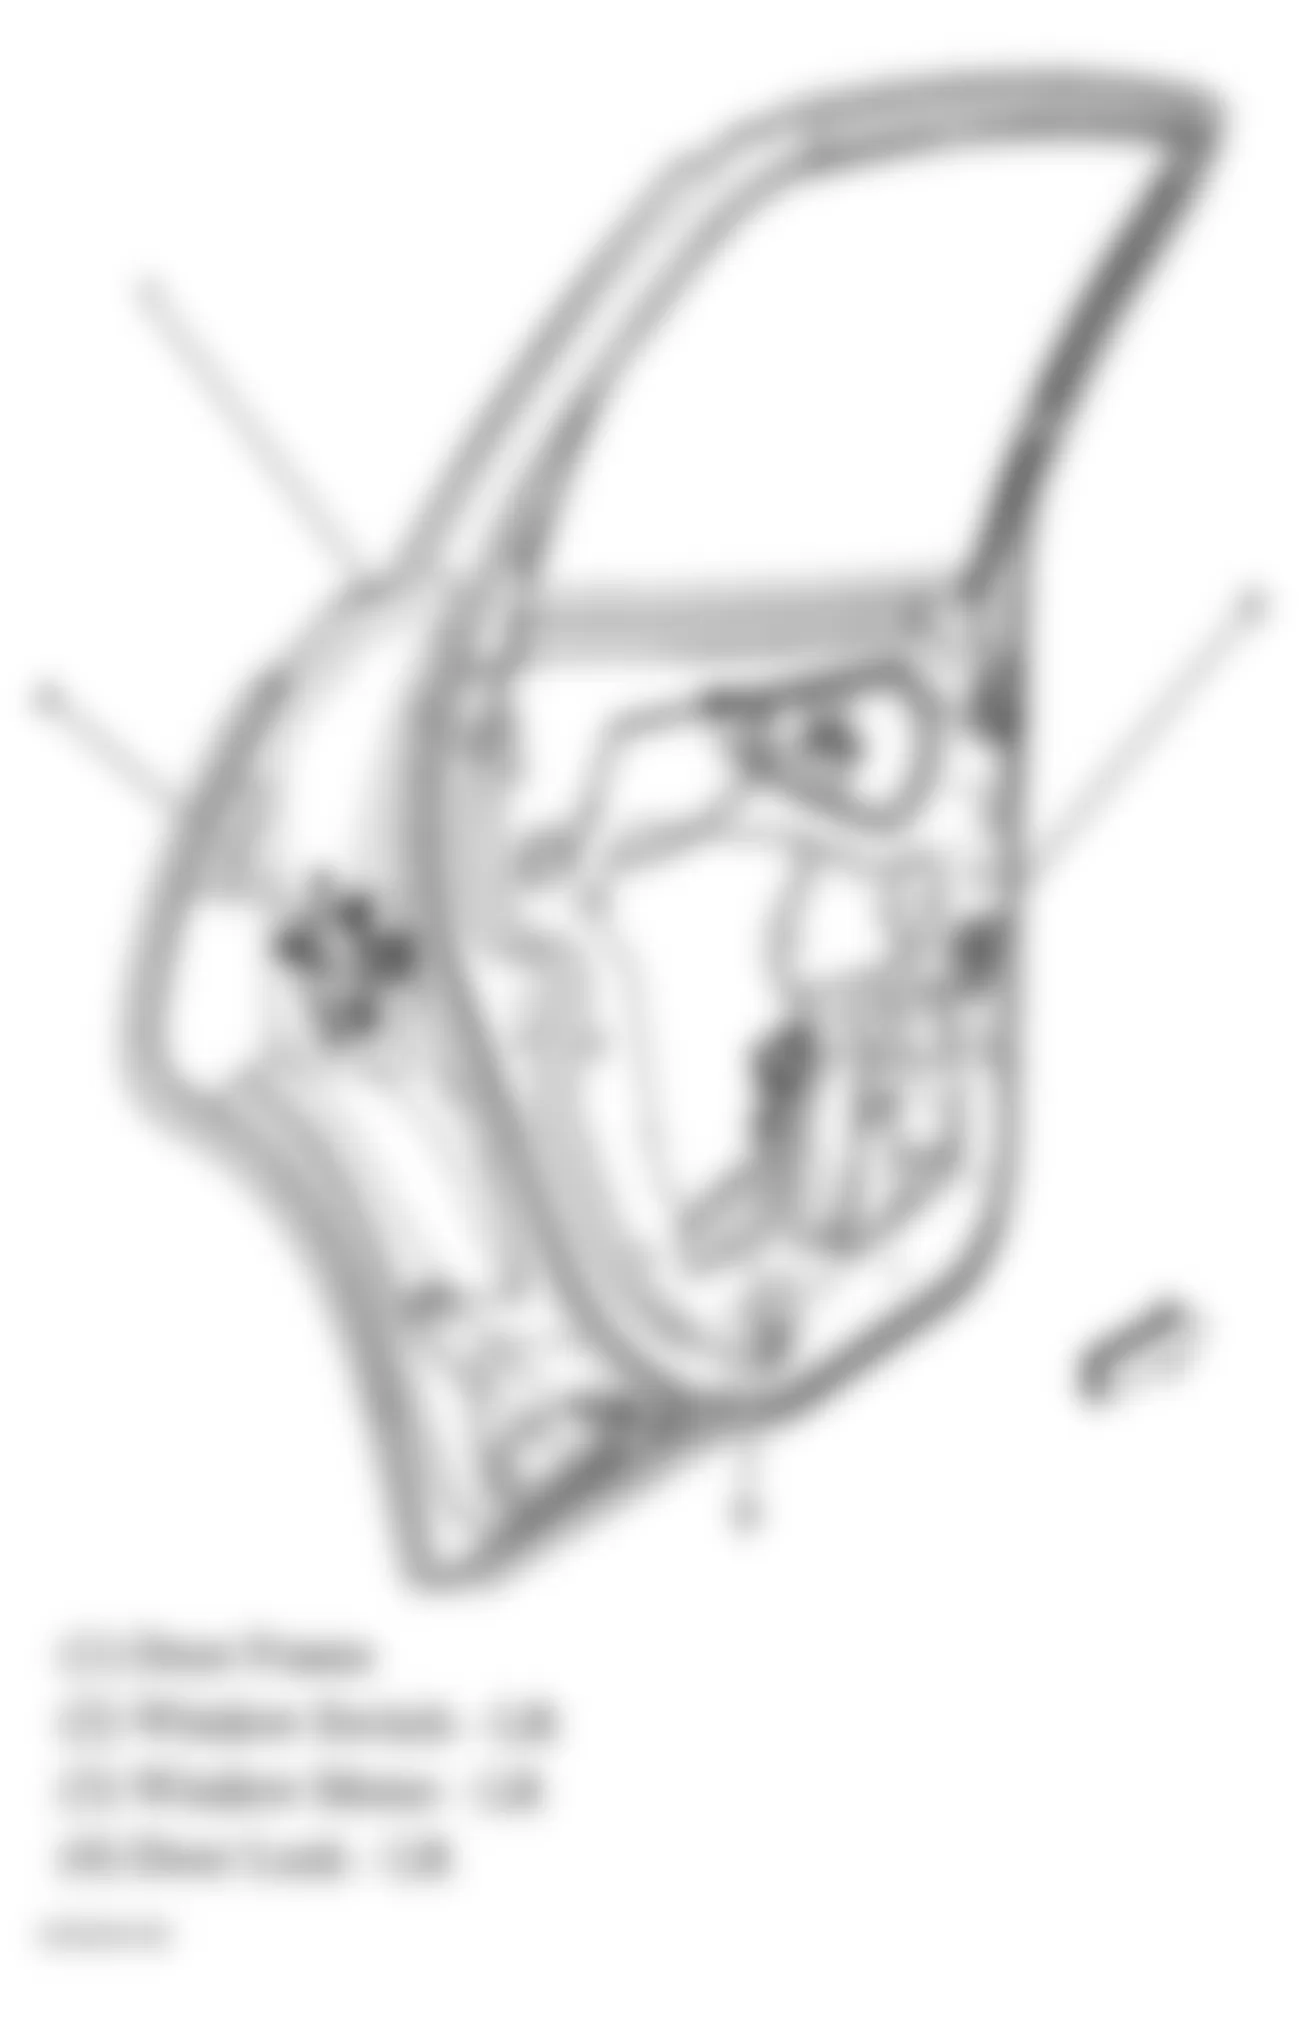 Buick Allure CXL 2006 - Component Locations -  Left Rear Door